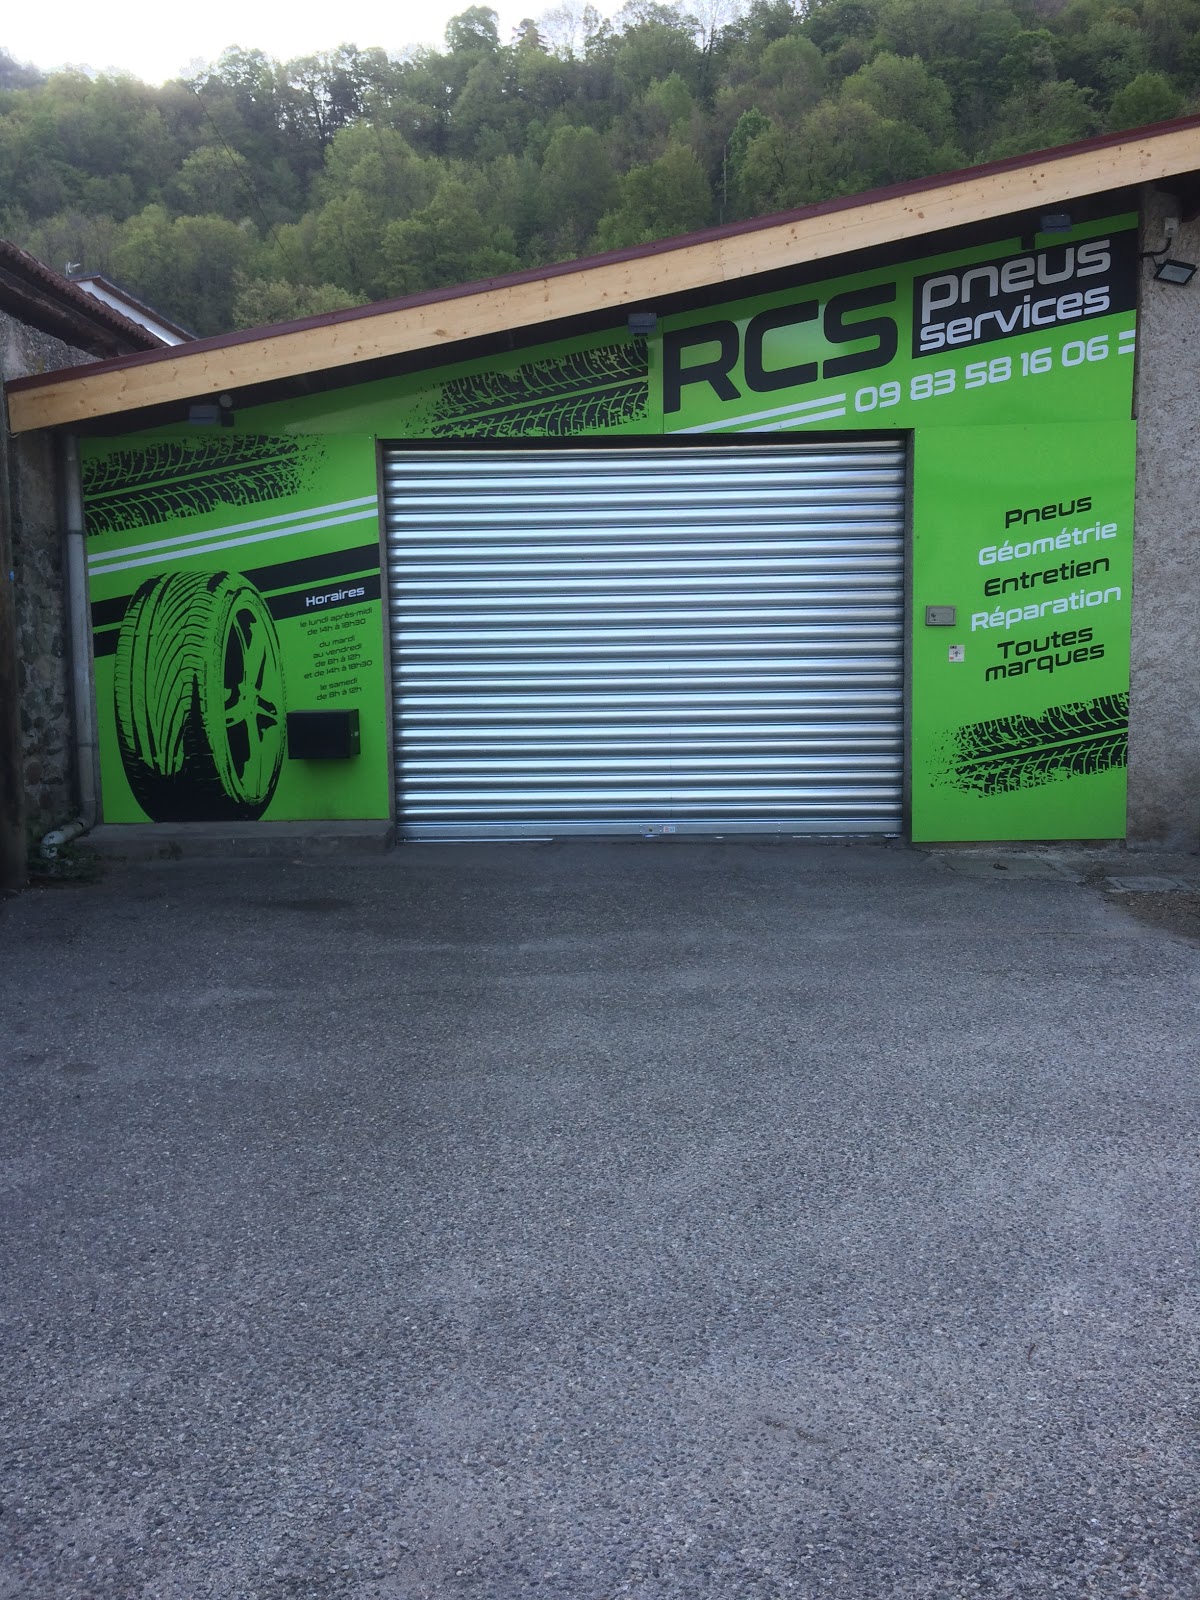 Garage RCS Pneus Services